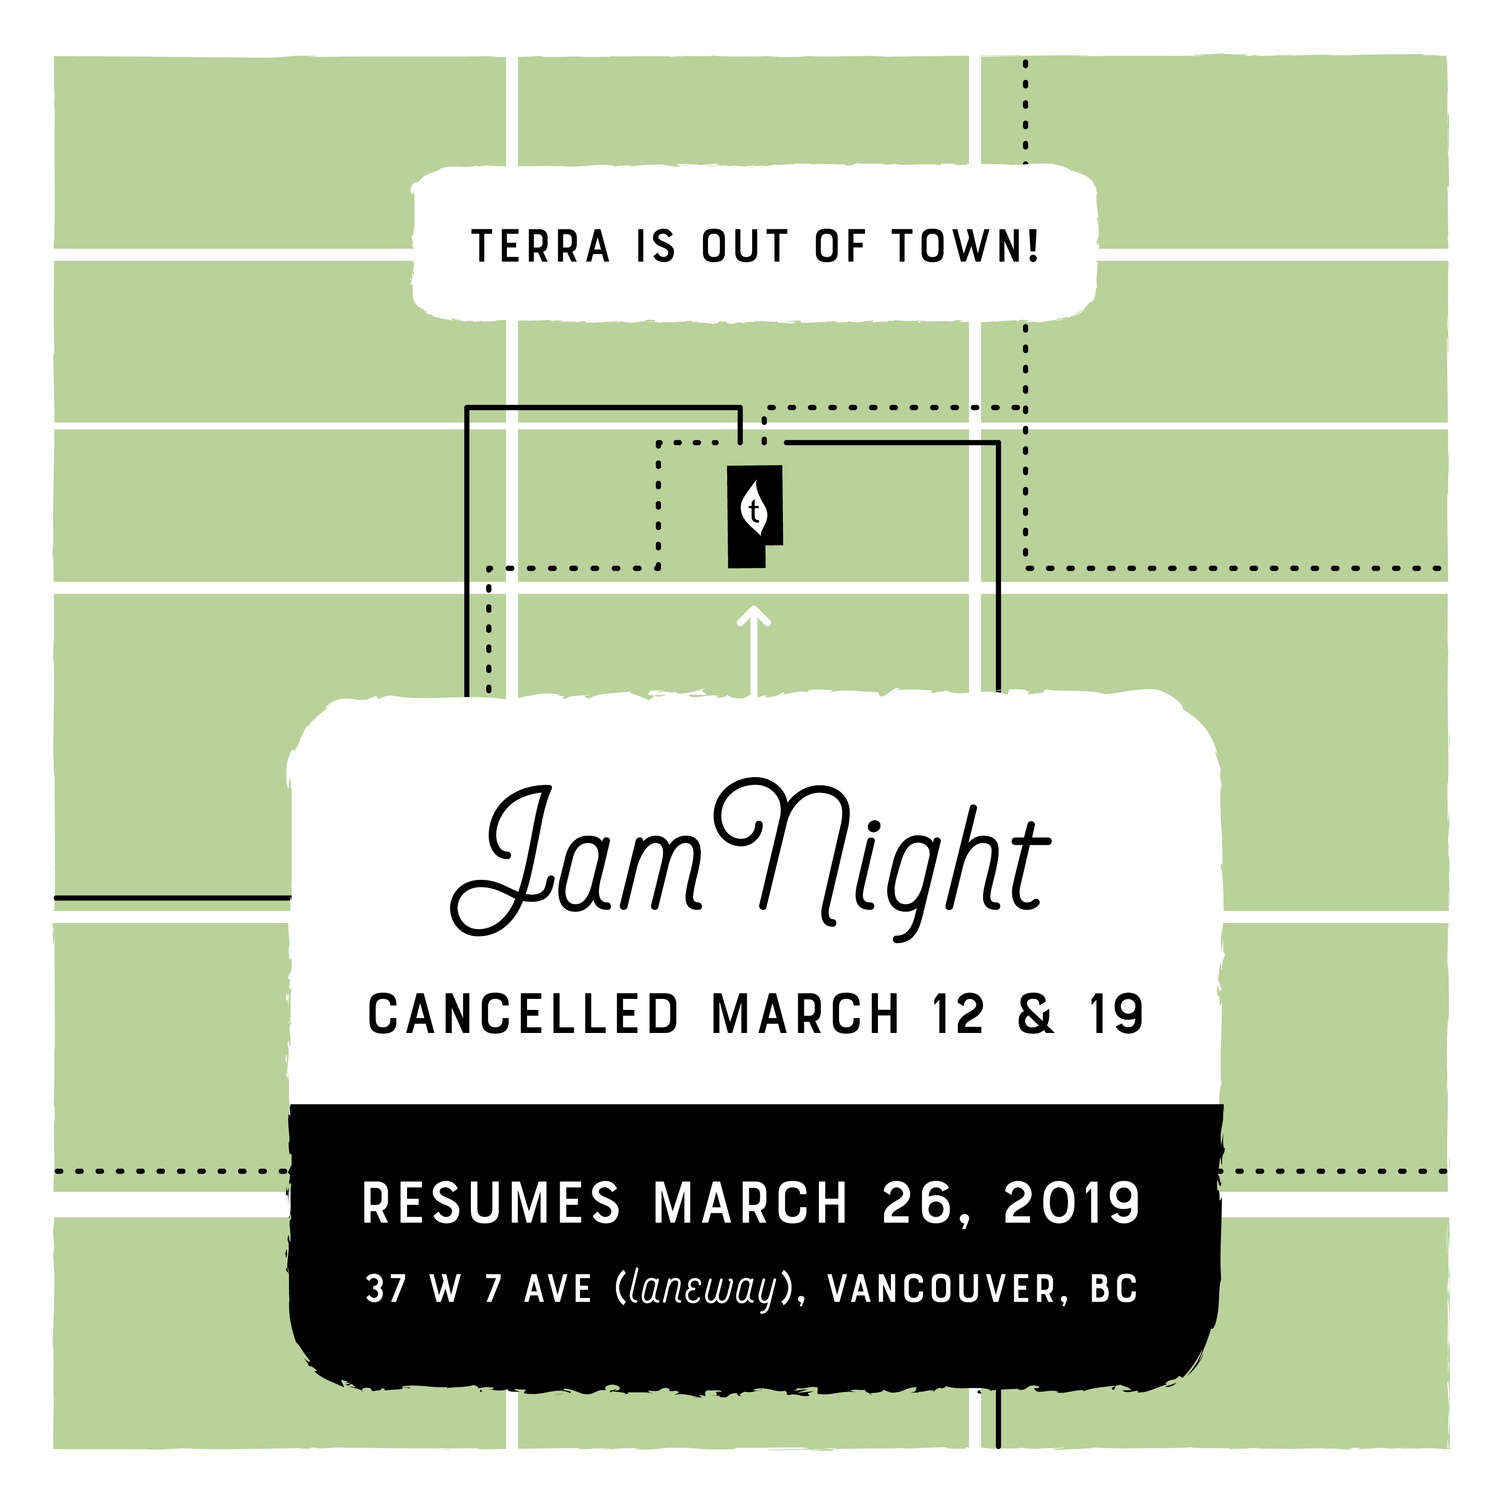 March 12 & 19, 2019 - No Jam Night!